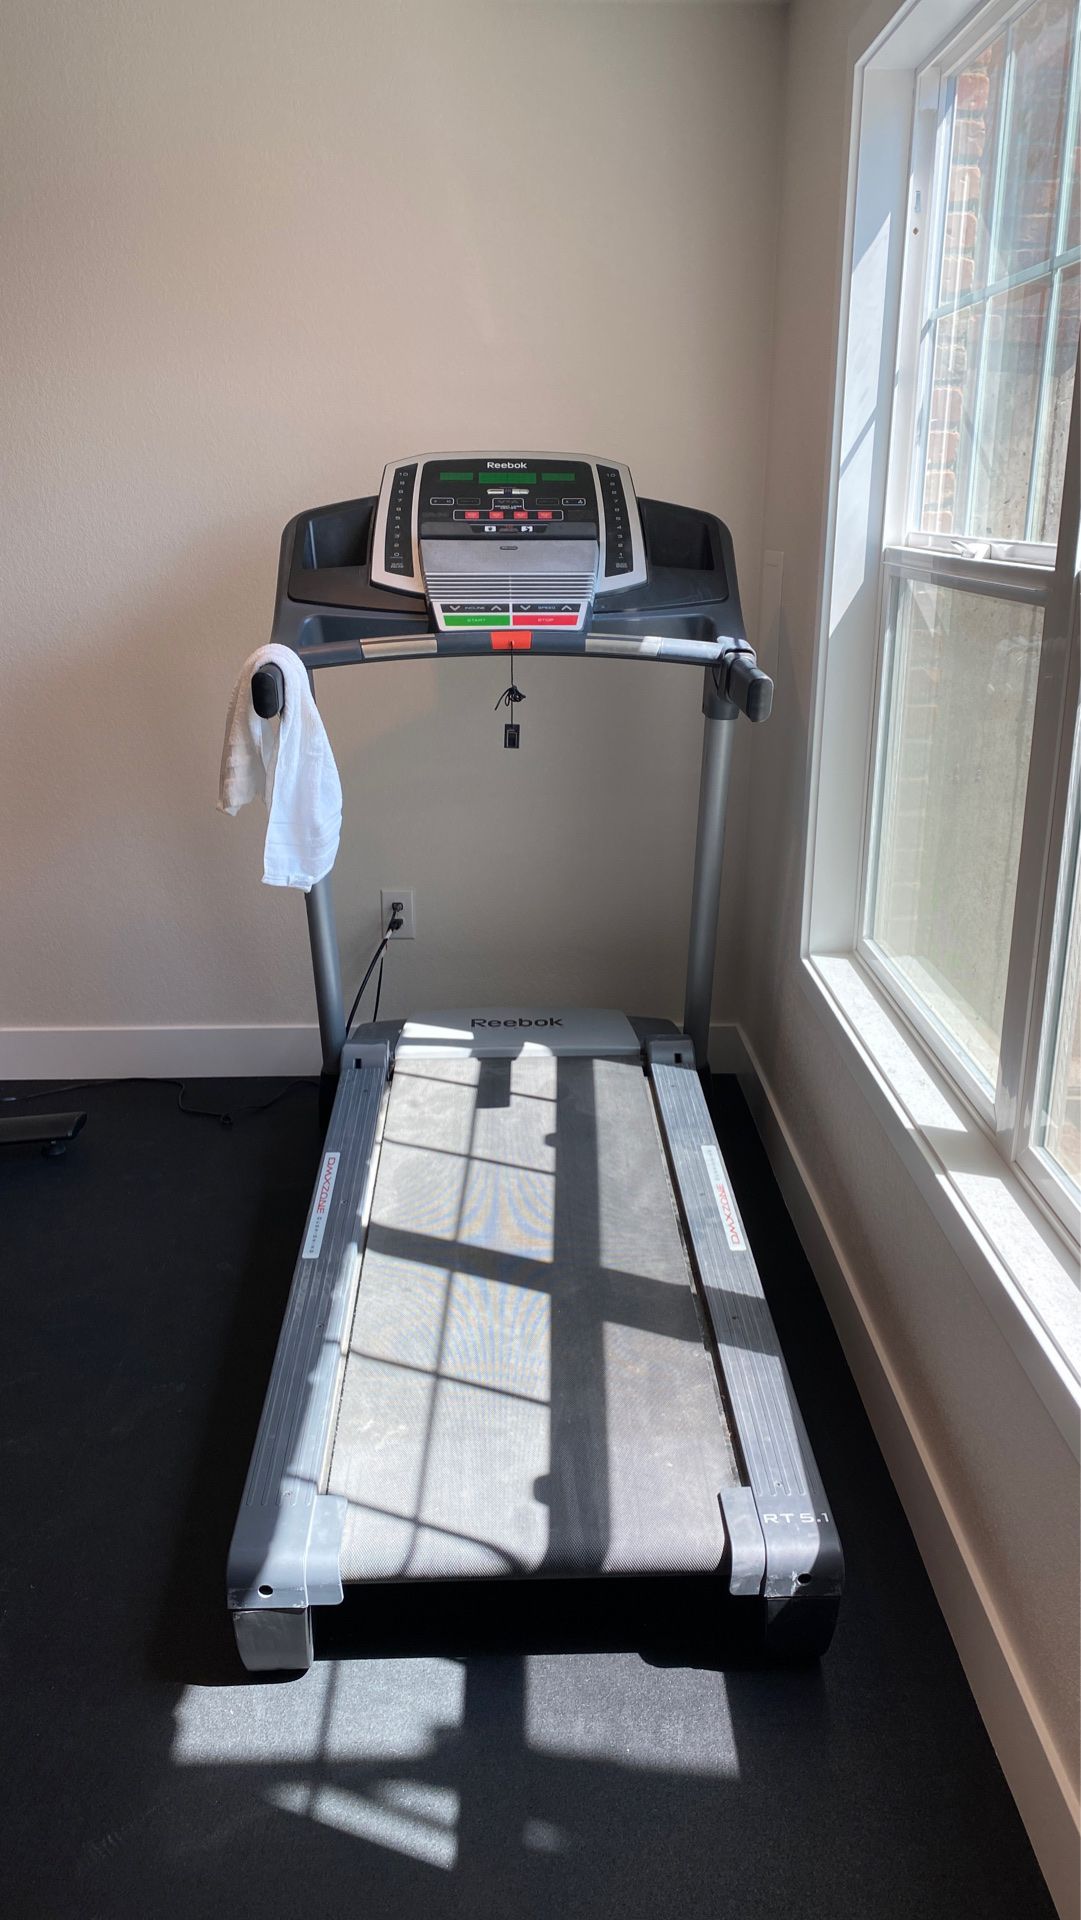 Reebok Treadmill